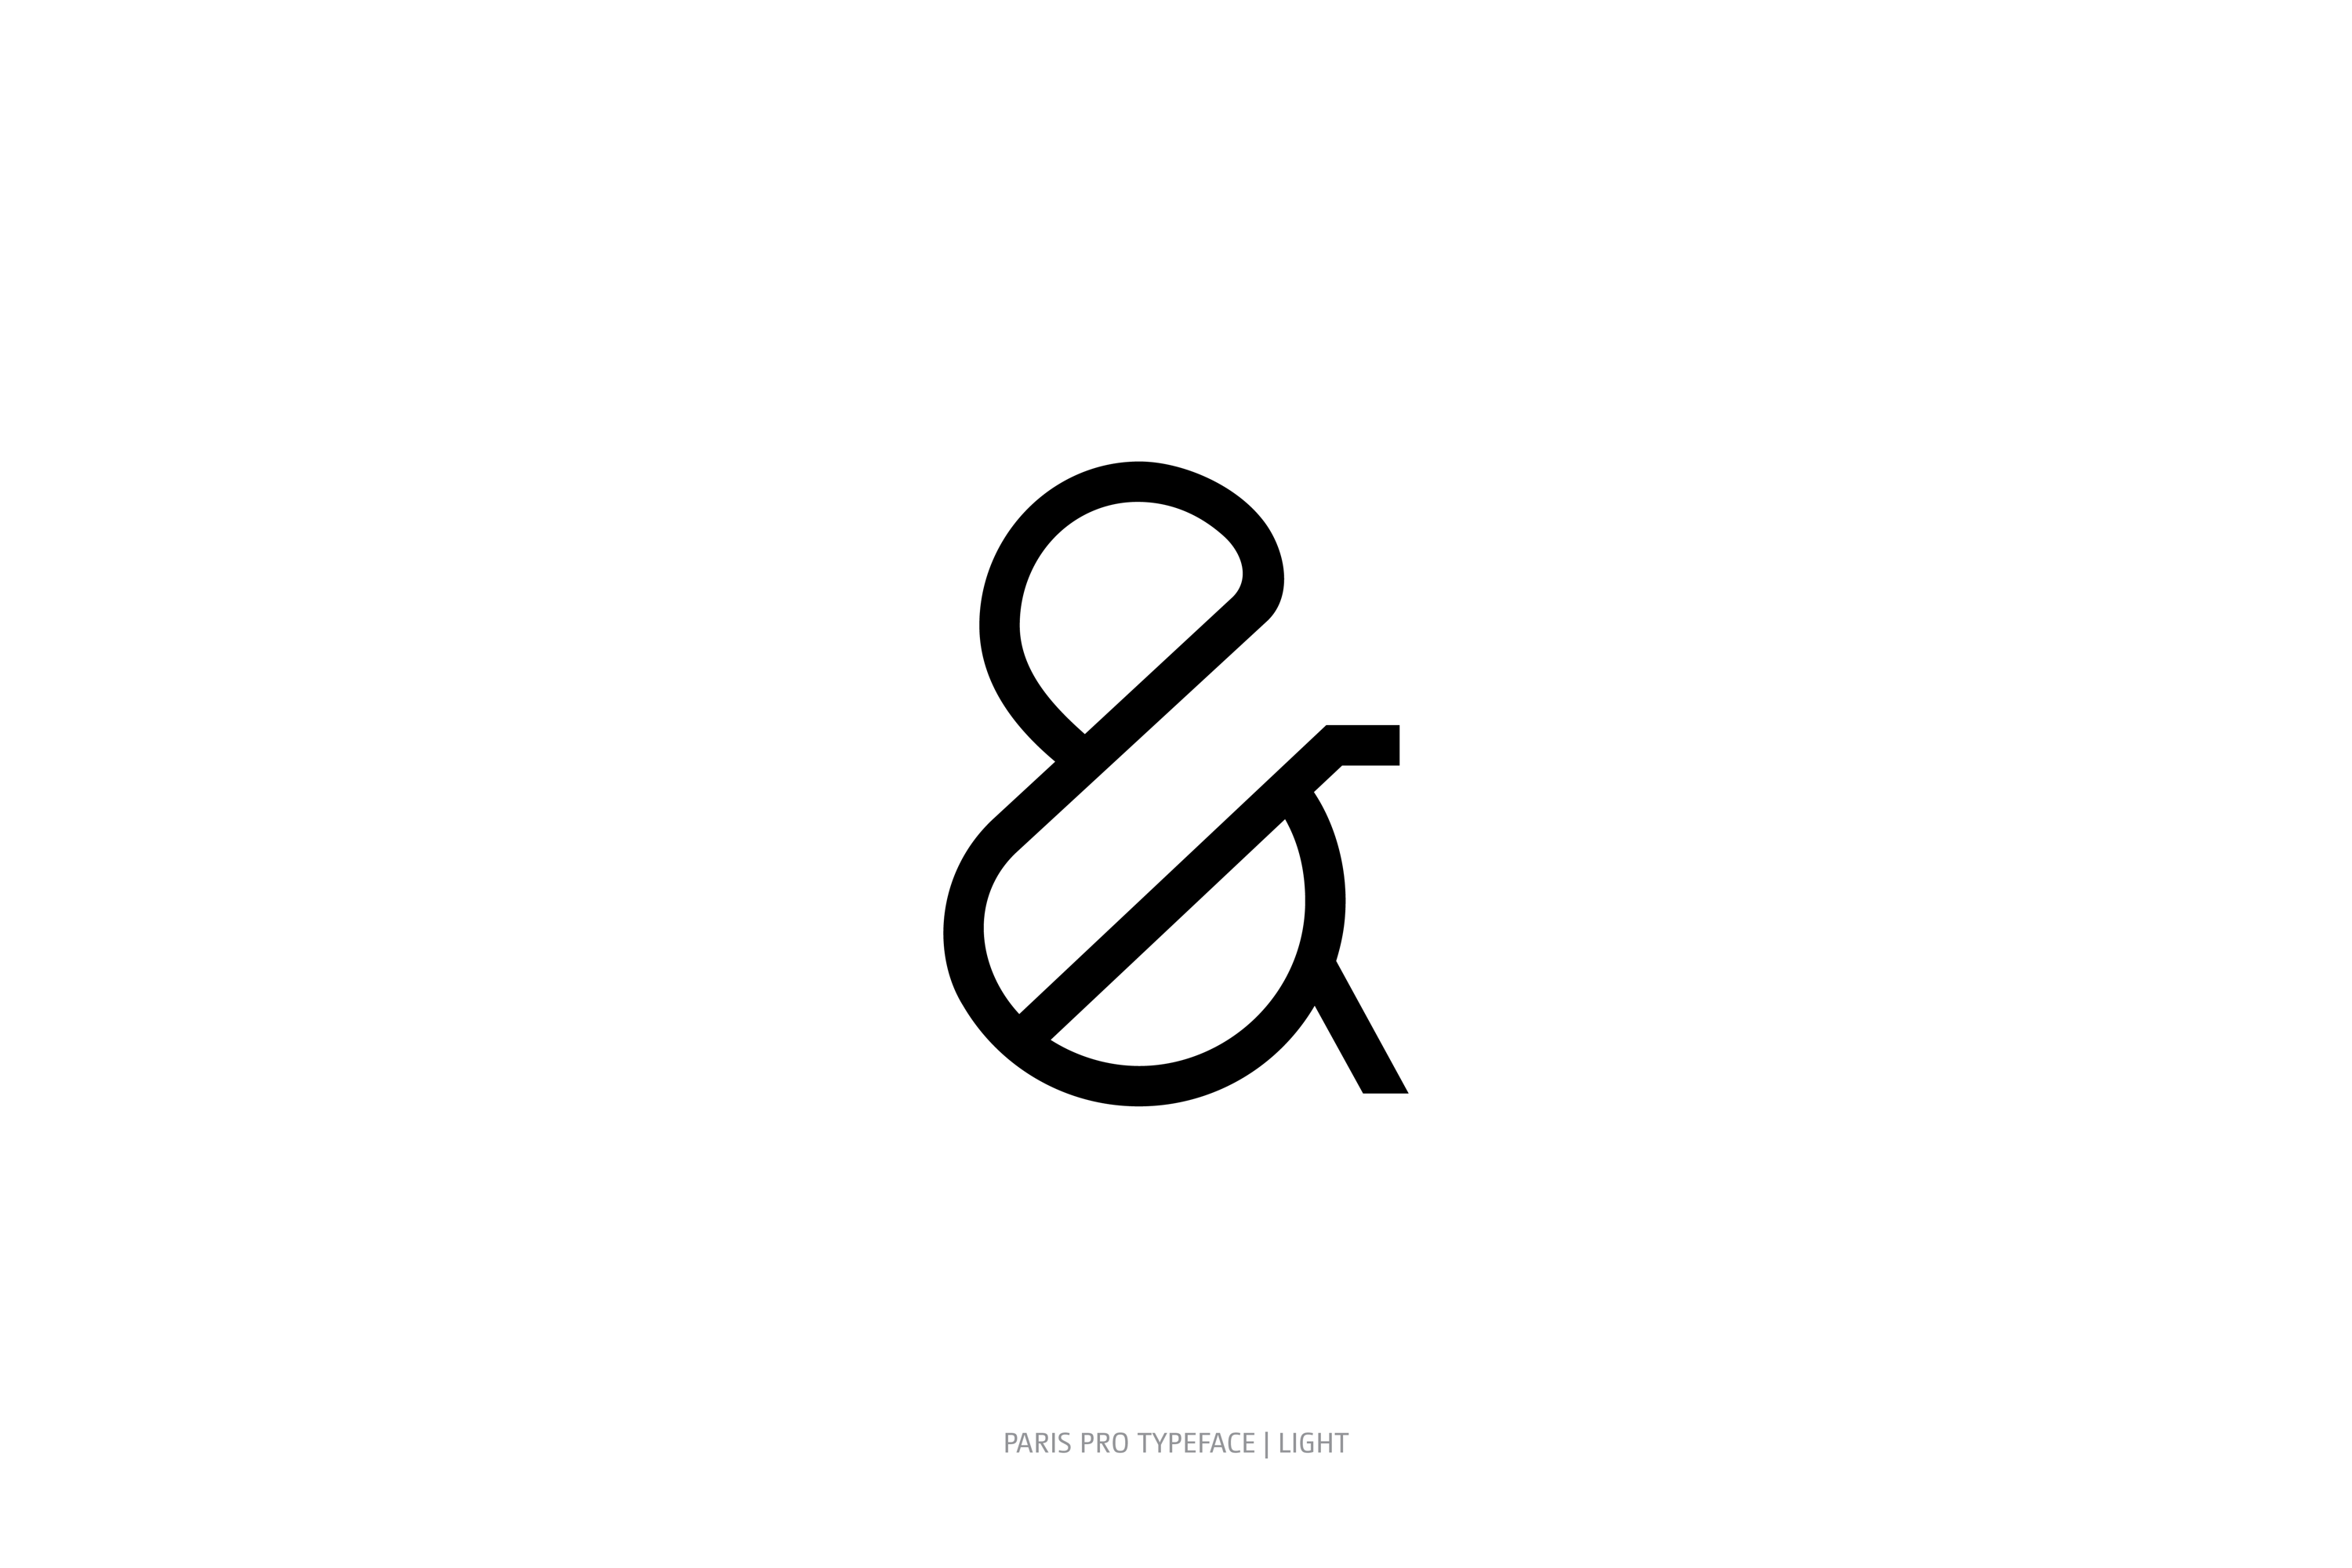 Paris Pro Typeface Light Style ampersand